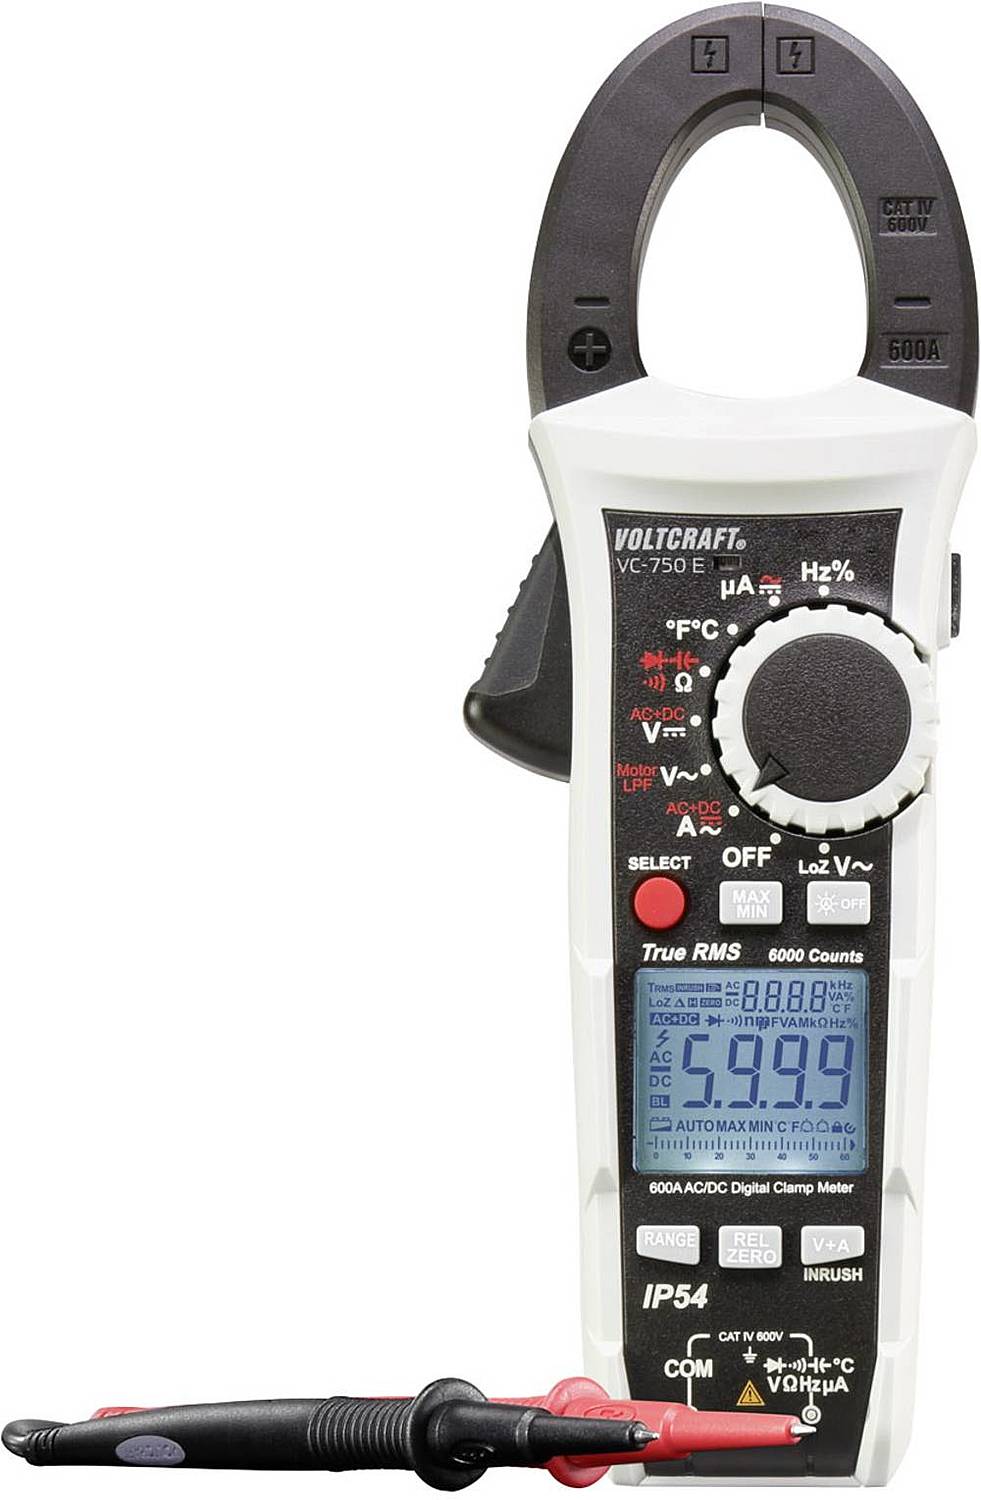 VOLTCRAFT VC-750 E Stromzange Handmultimeter Multimeter Messgerät Messzange